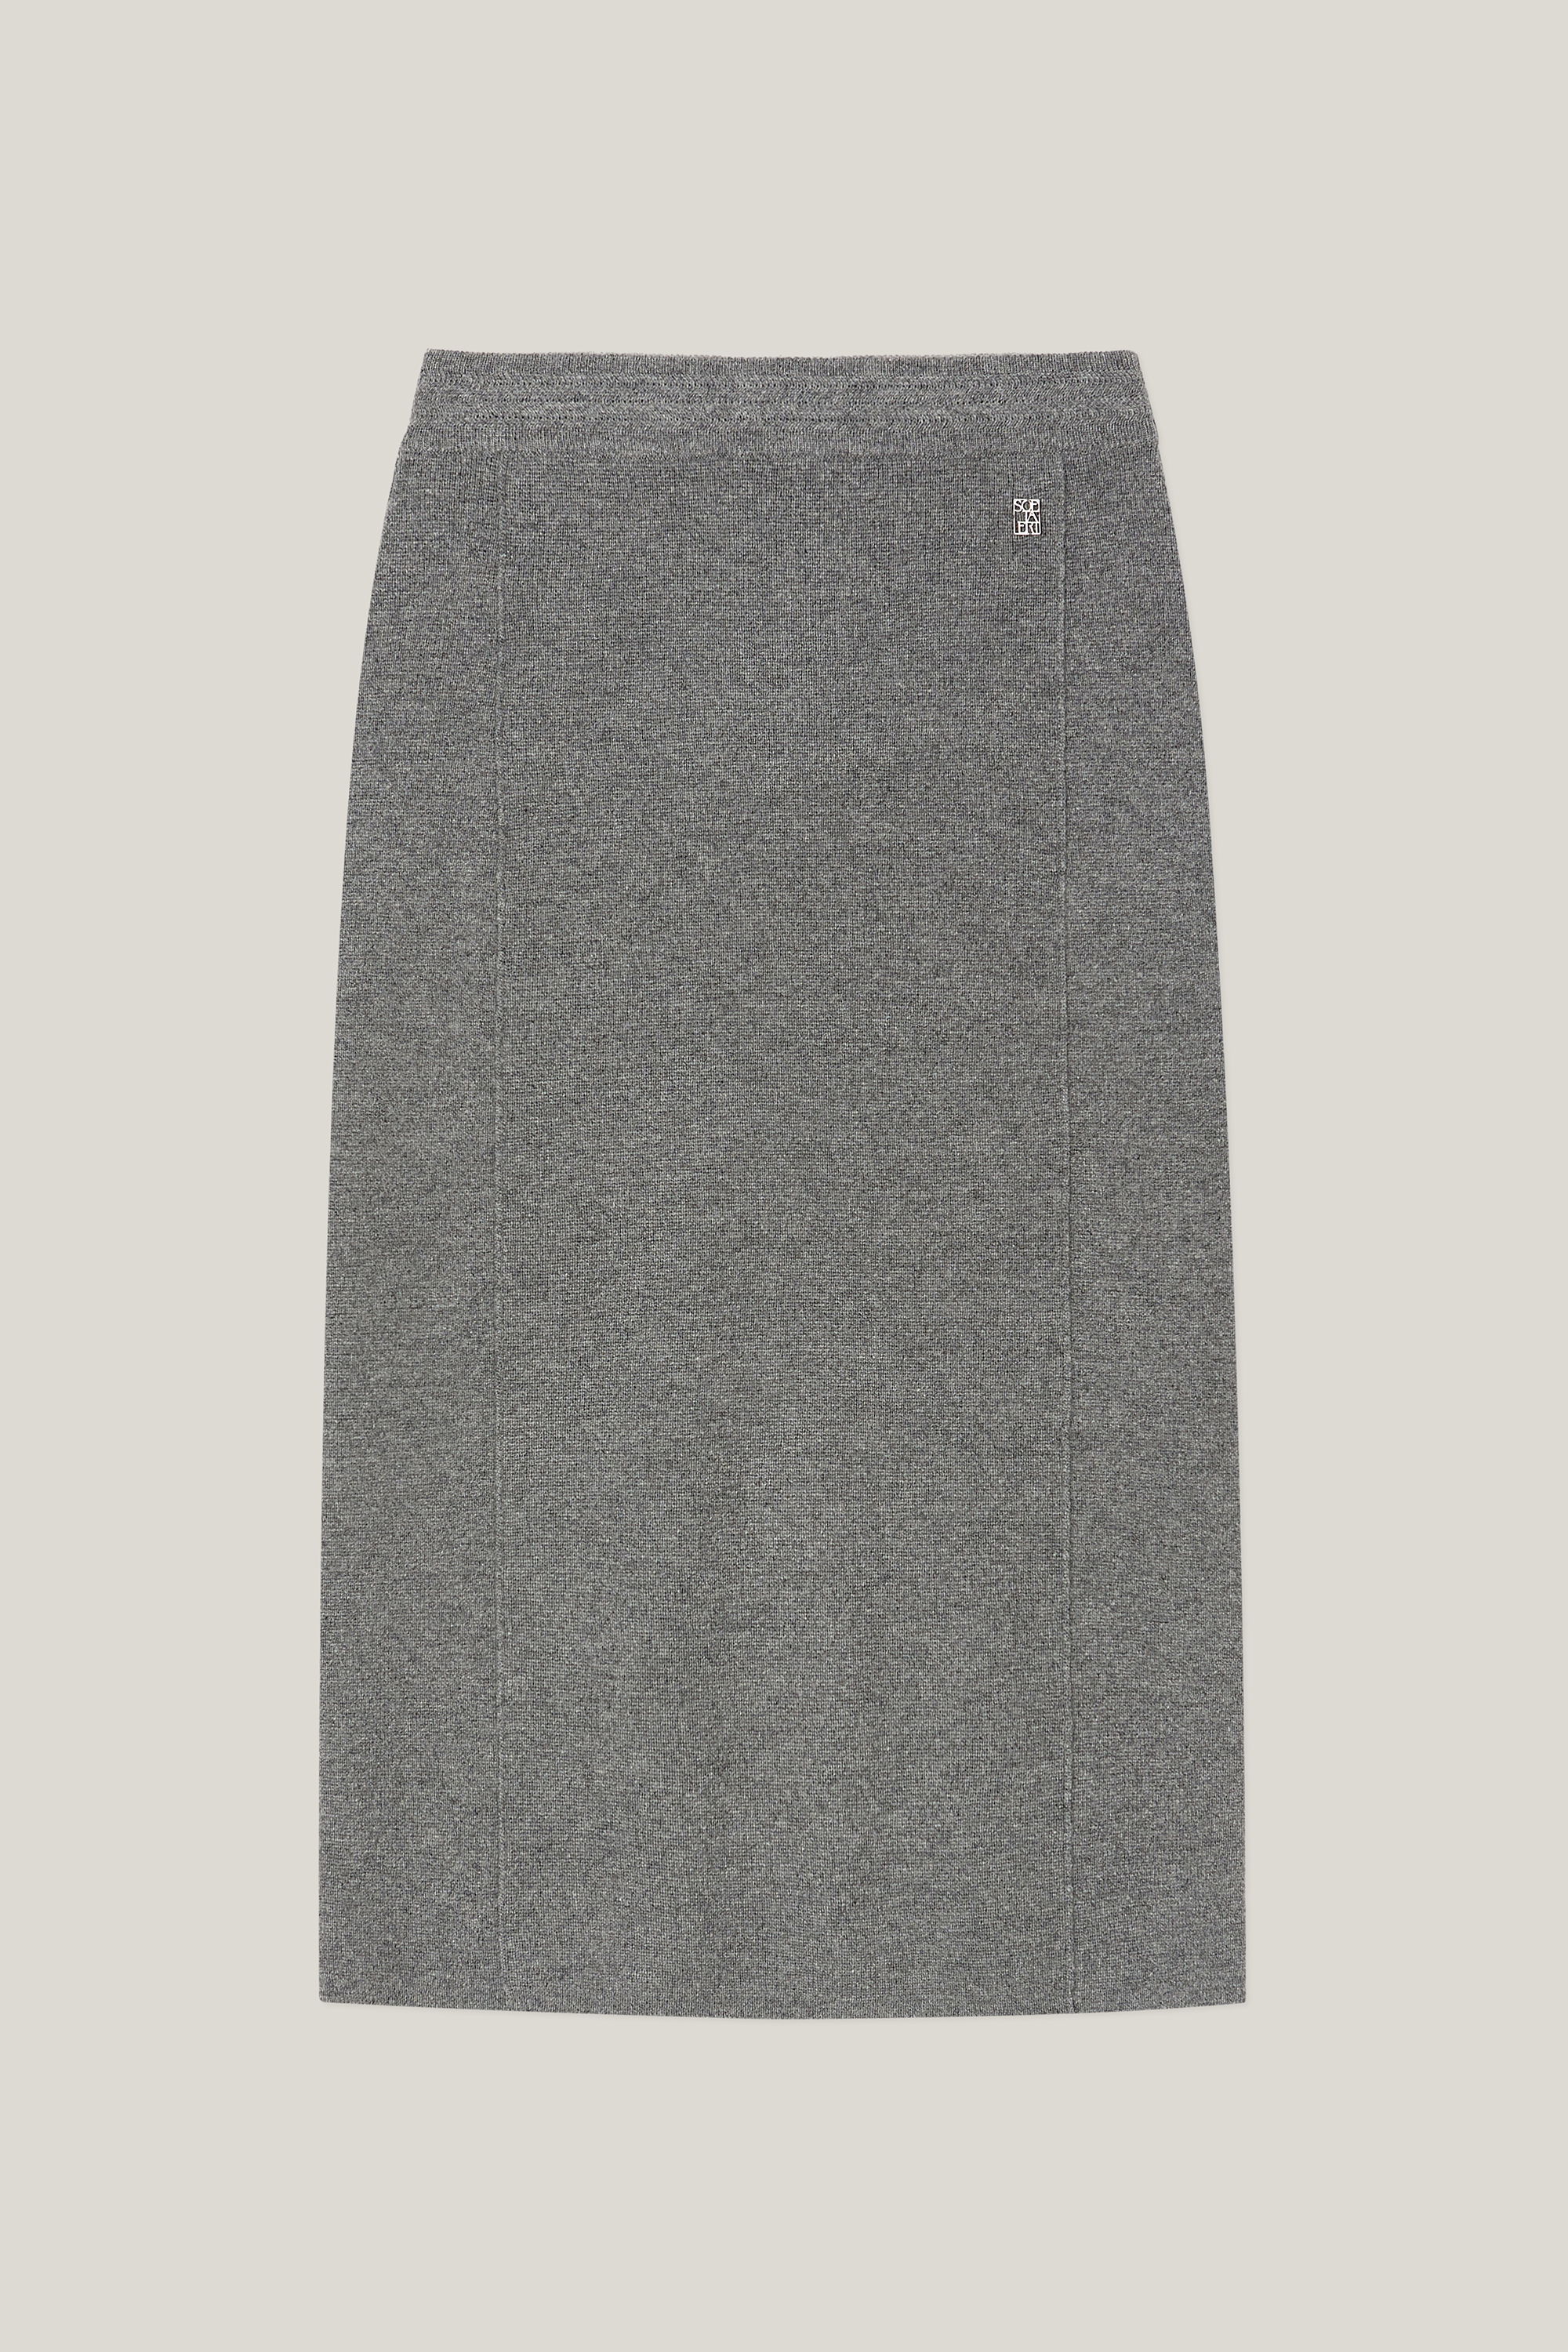 Jade Midi Skirt (Ash Grey)